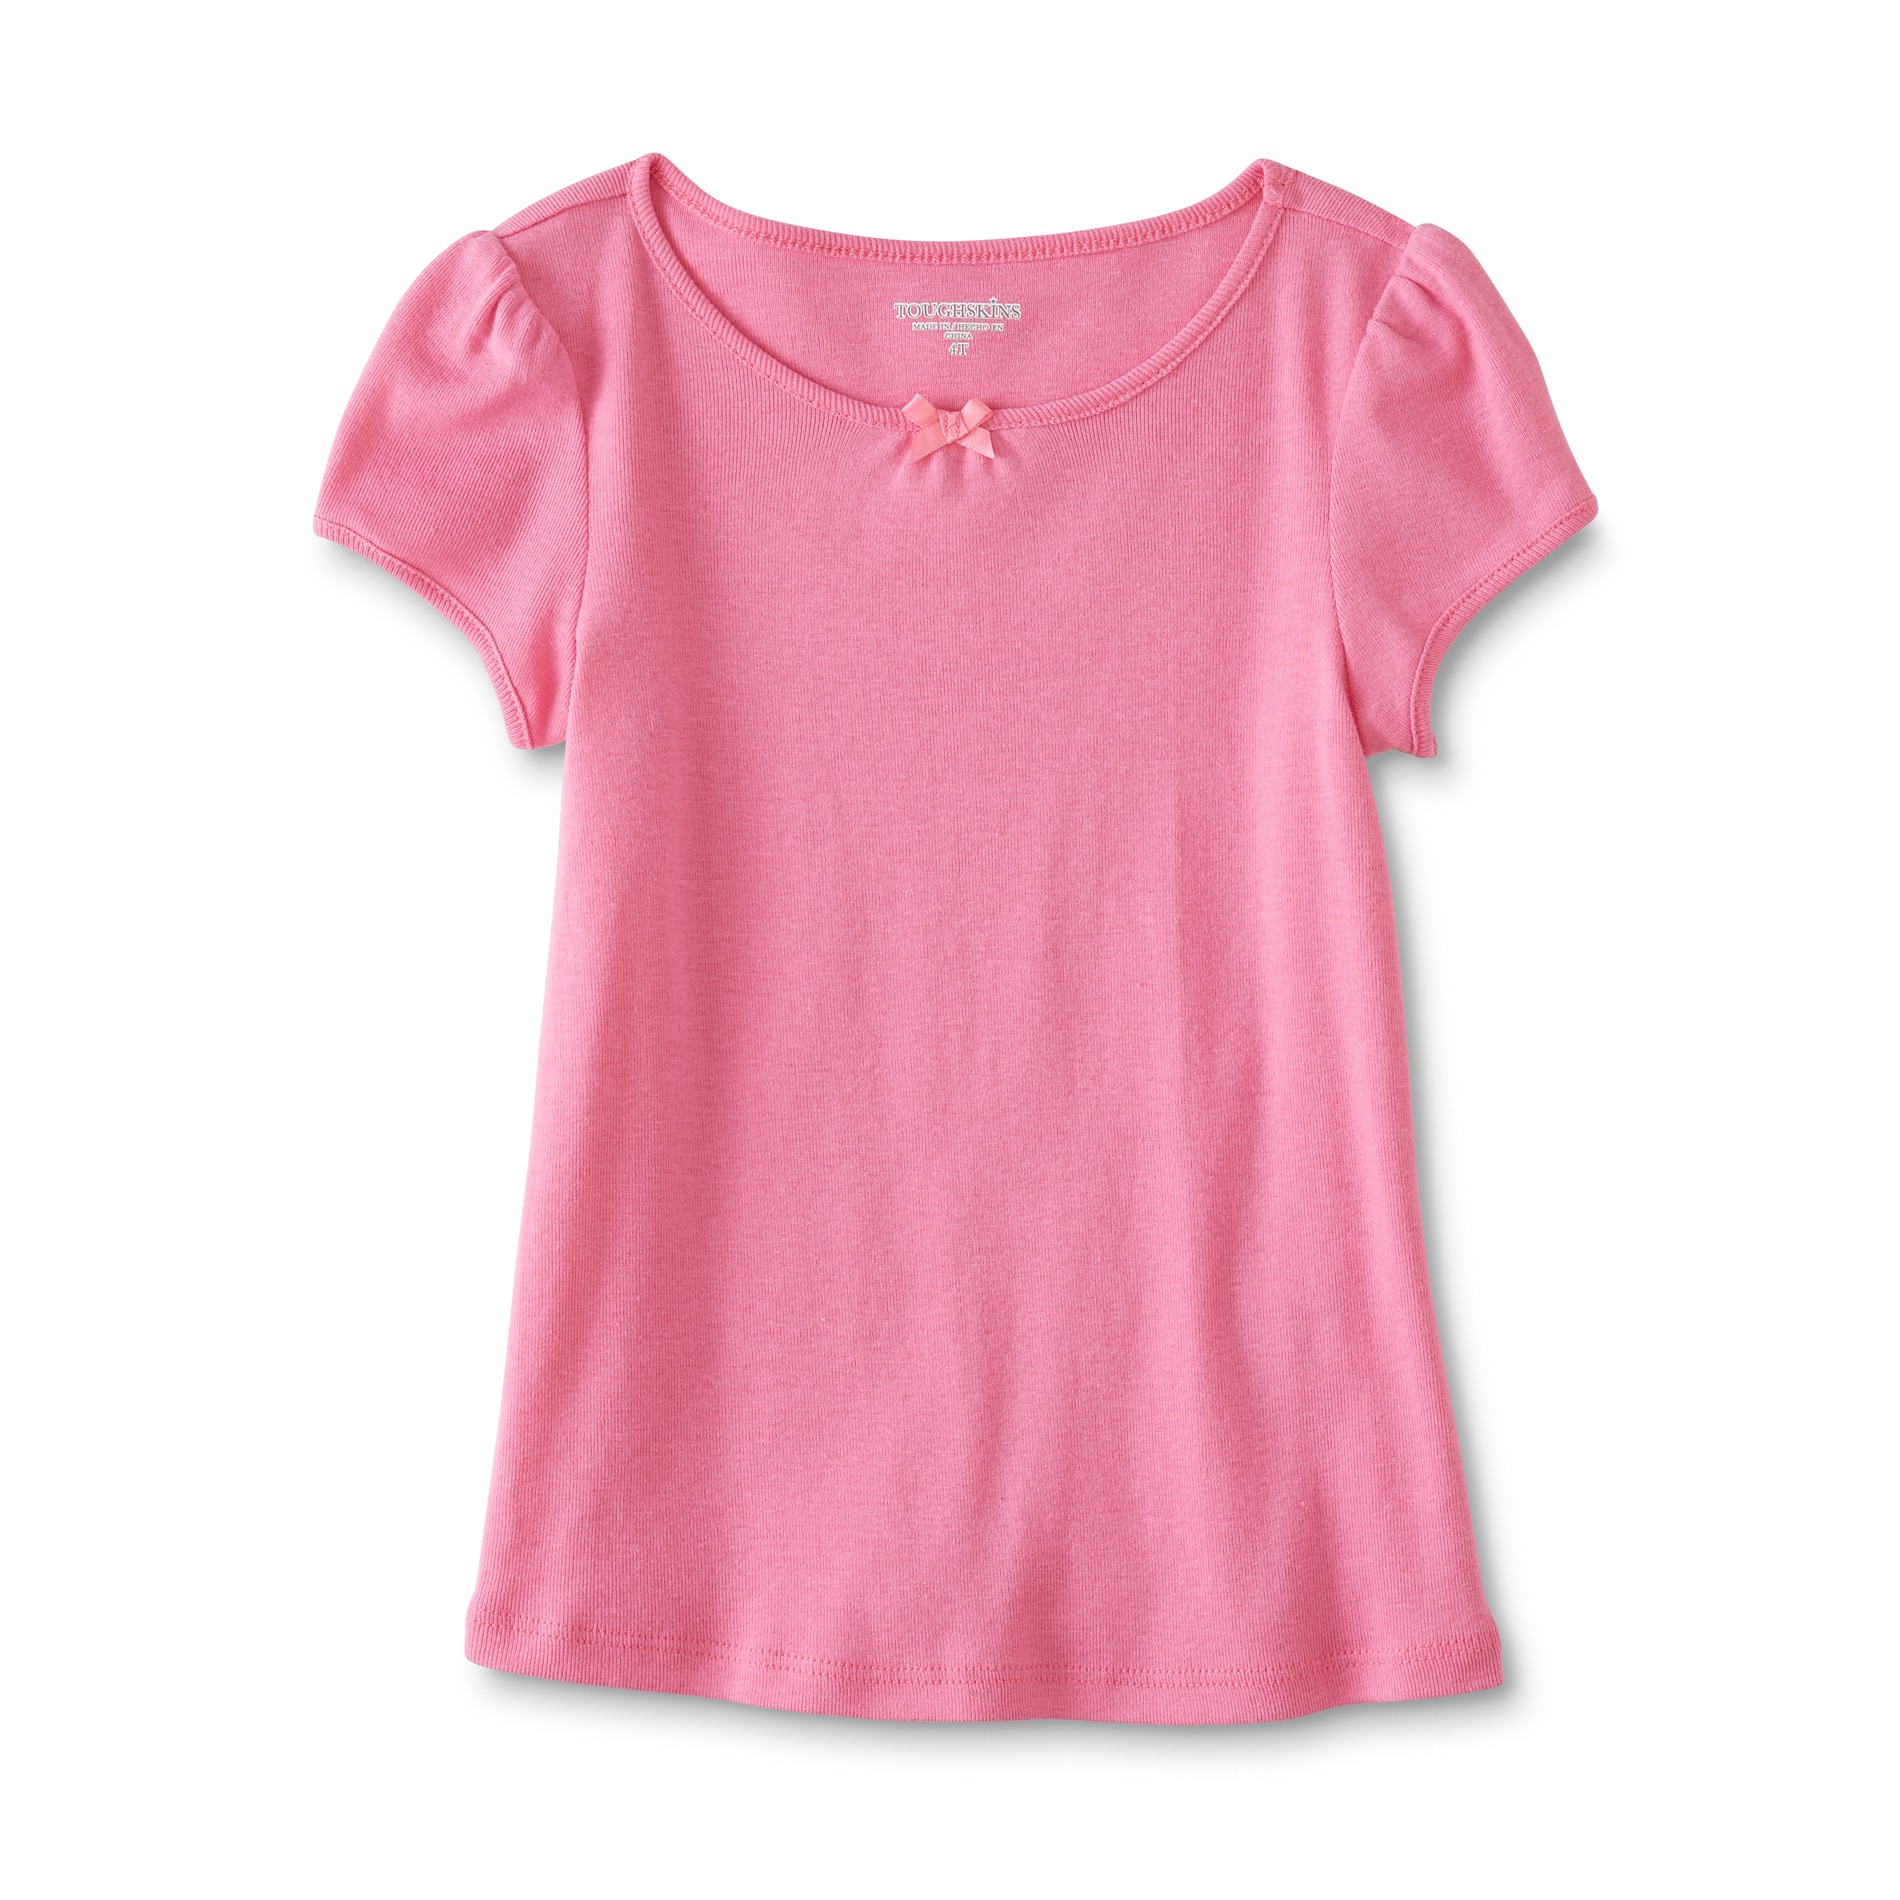 Toughskins Infant & Toddler Girls' Short-Sleeve T-Shirt